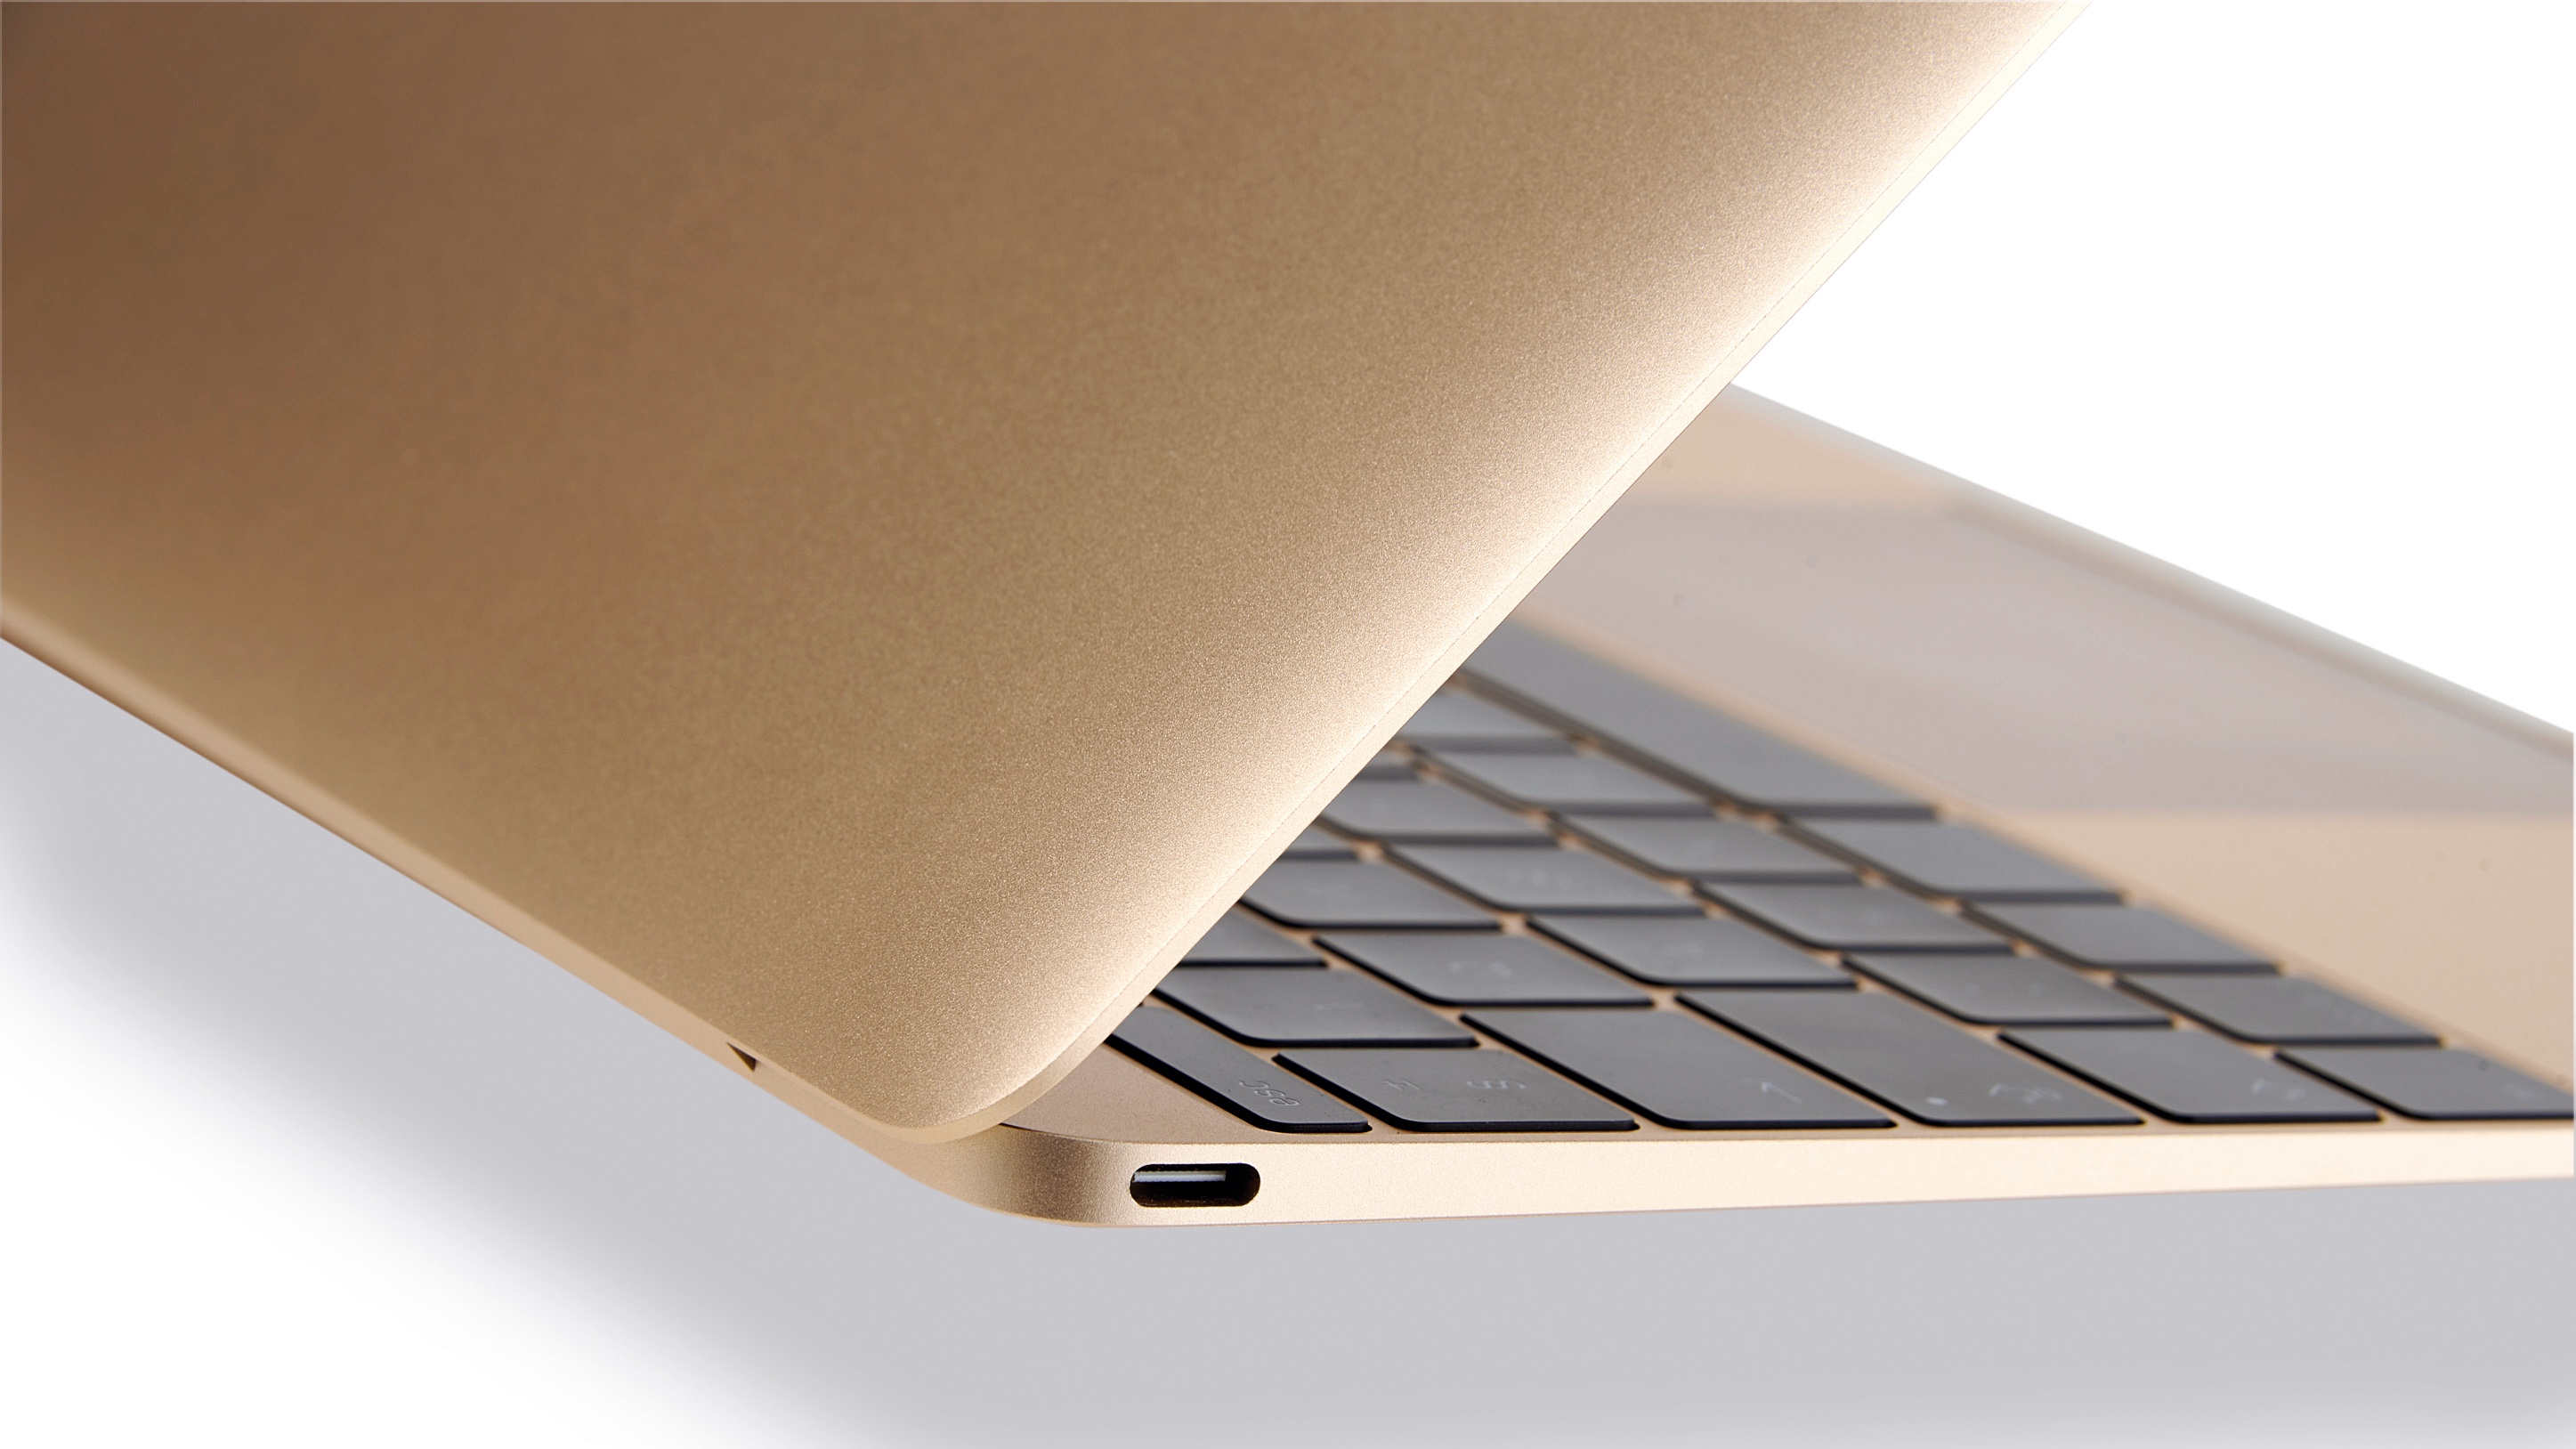 Mac 1 يوليو 2021 1comment جهاز MacBook مقاس 12 بوصة (2015) هو الآن منتج قديم